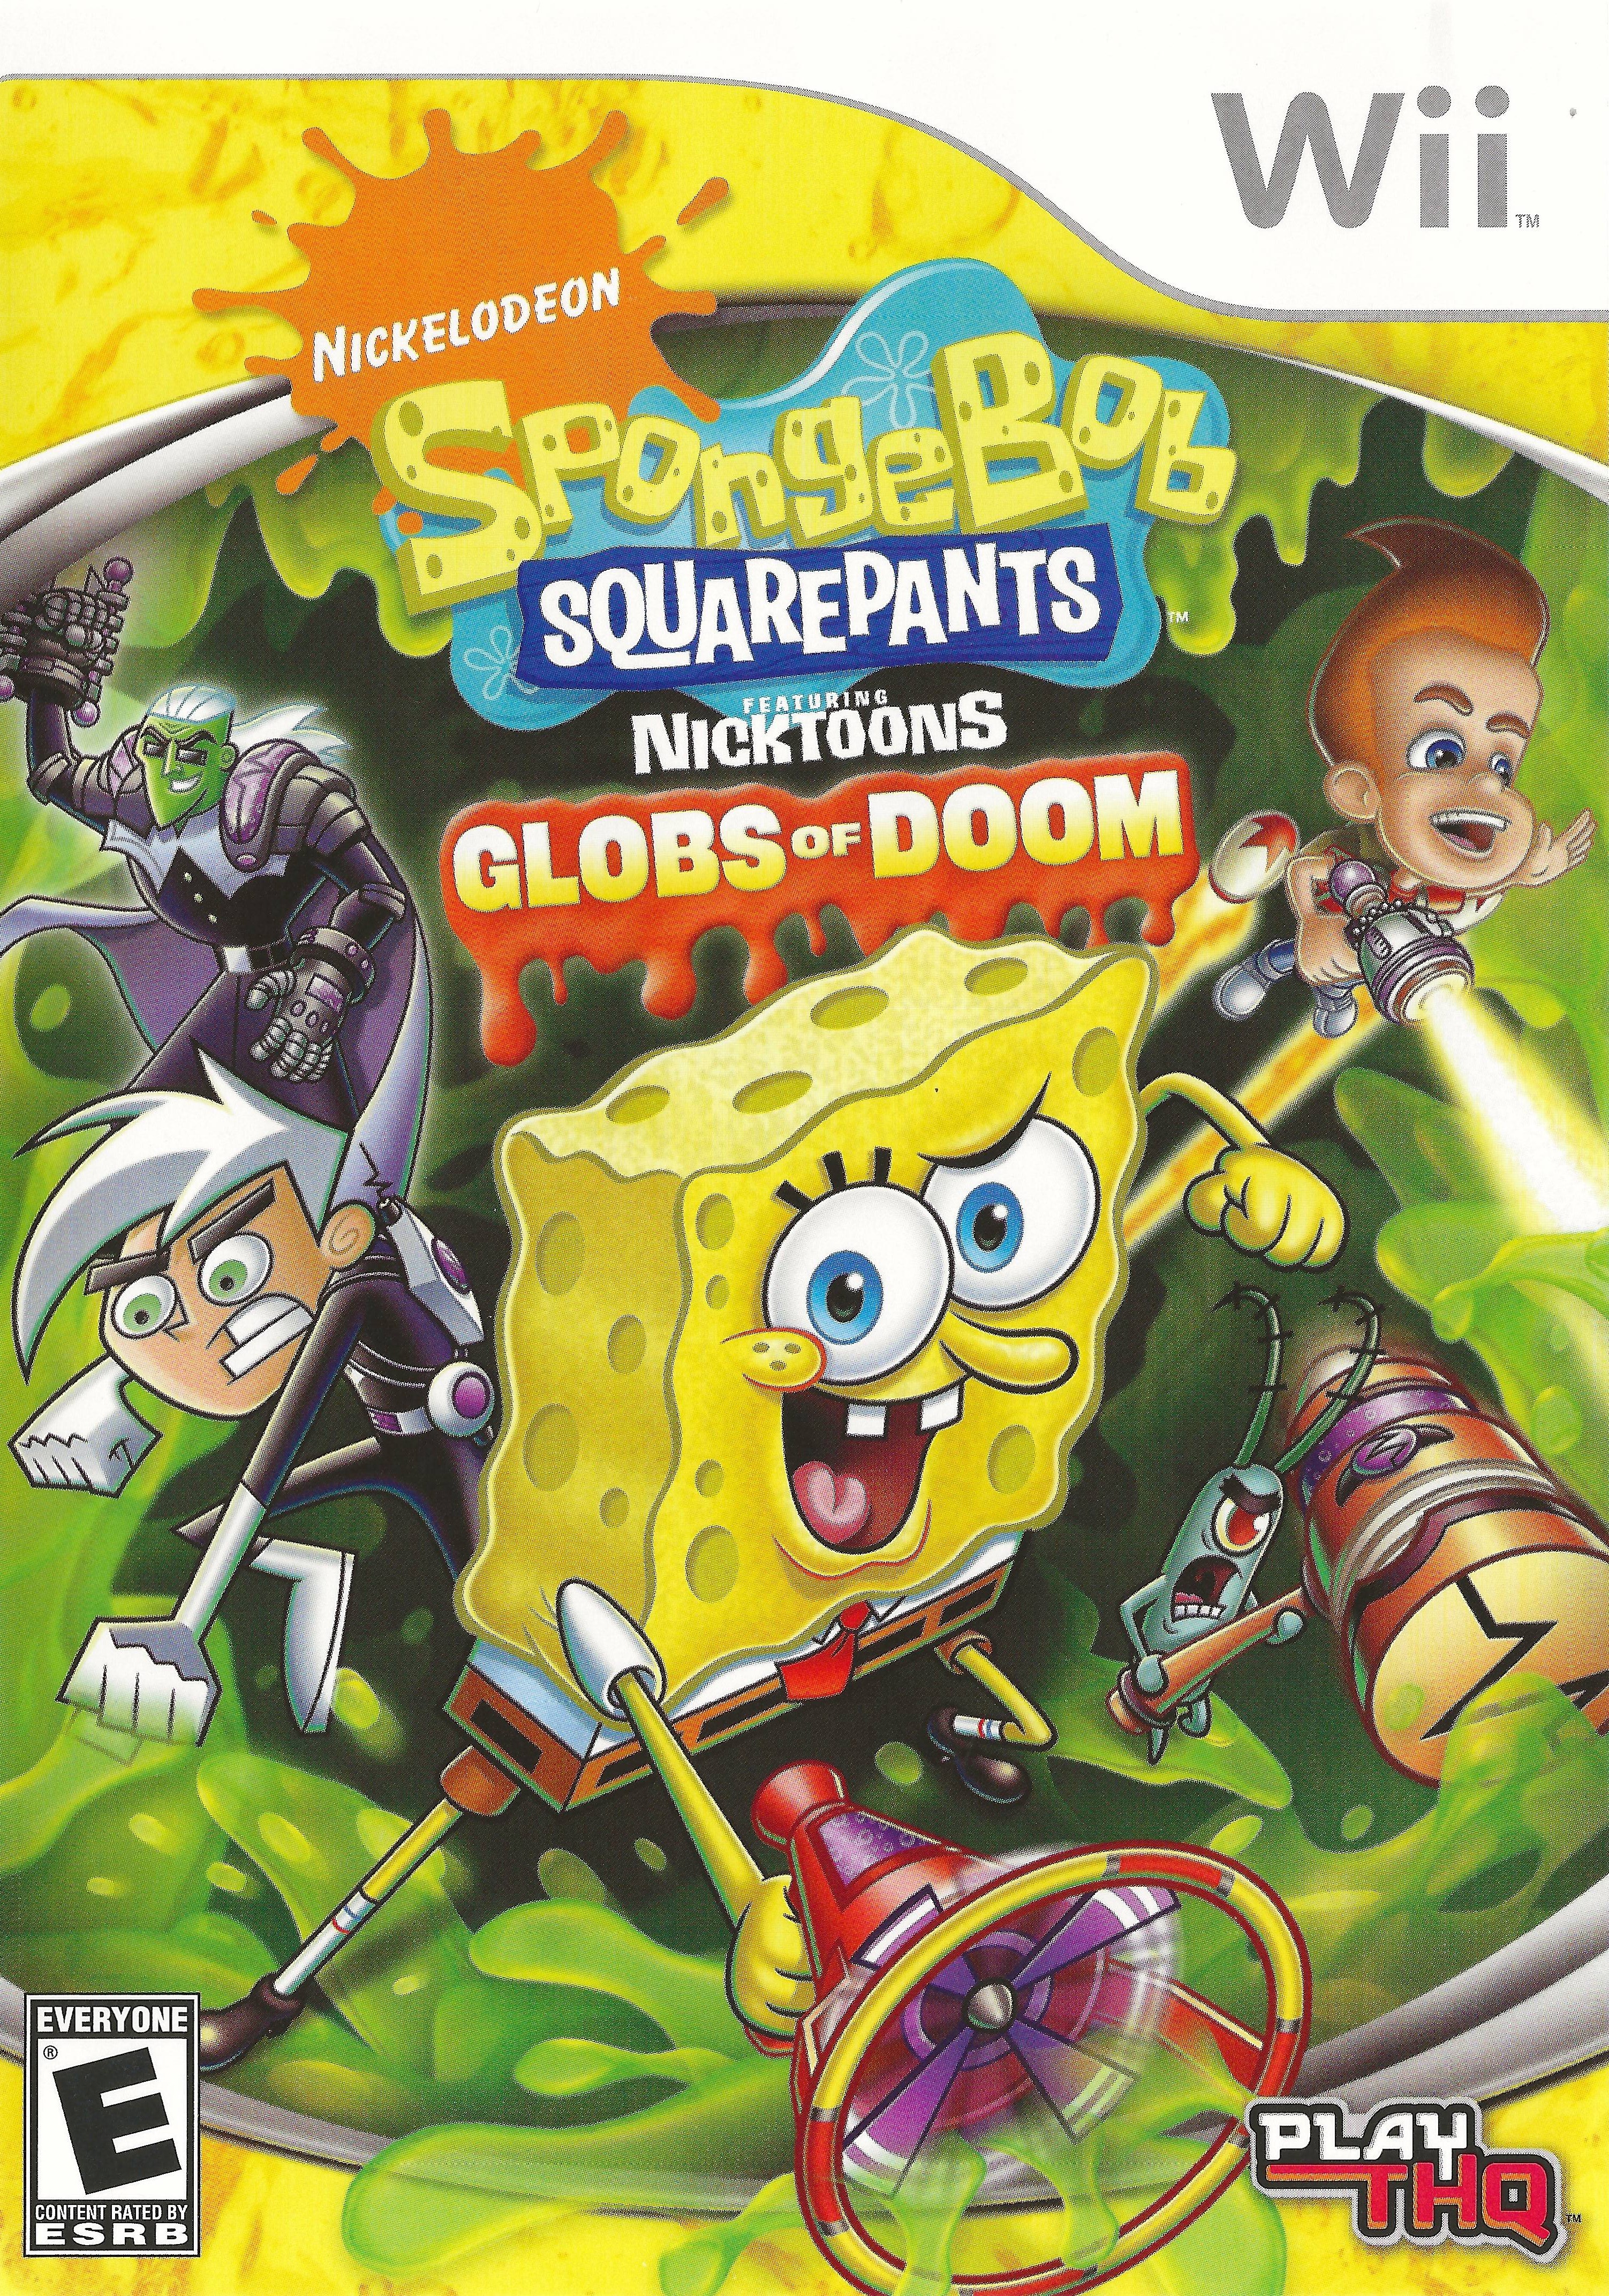 'Spongebob Squarepants: featuring Nicktoons - Globs of Doom'